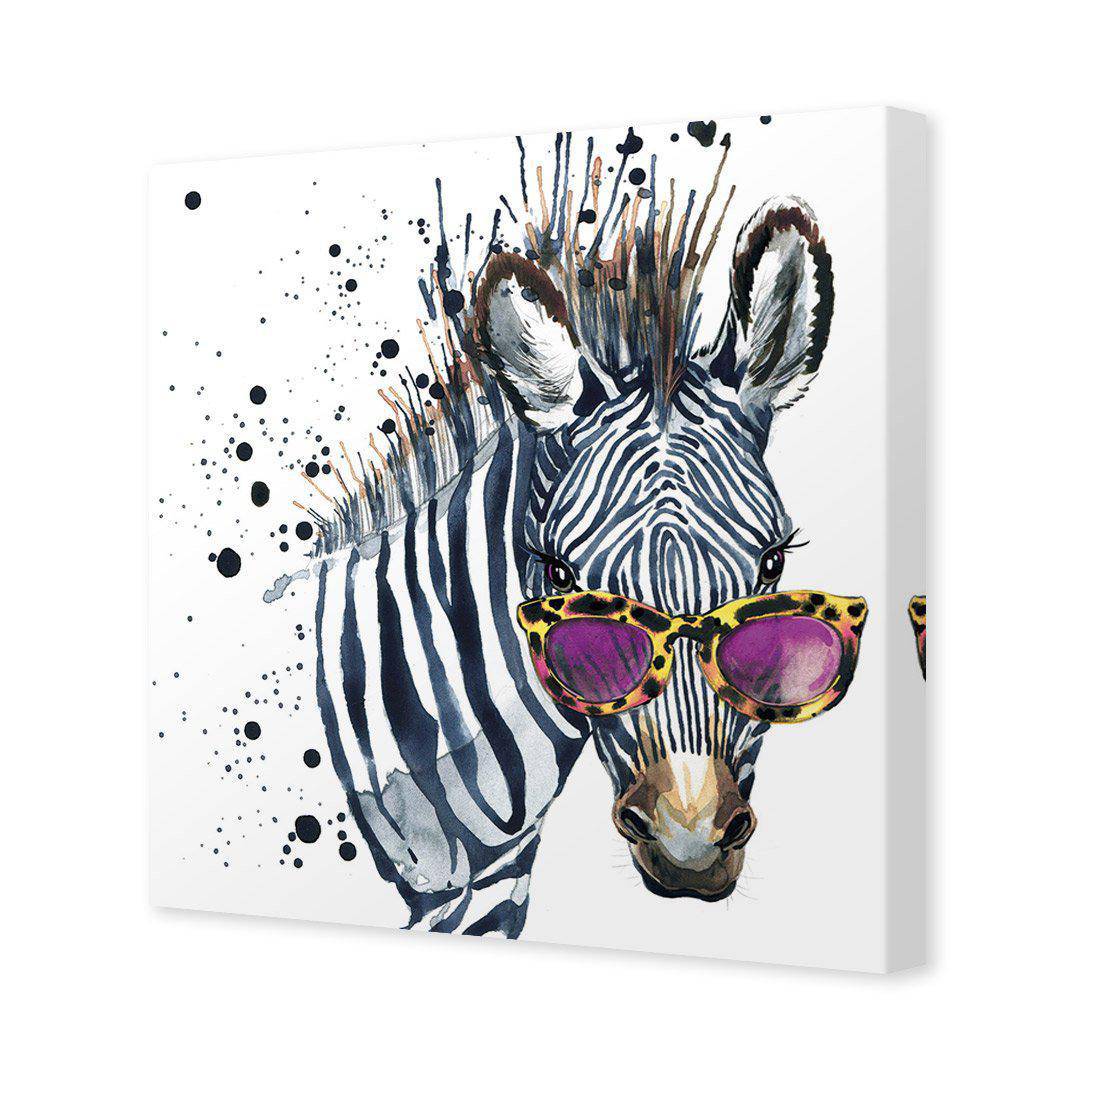 Cool Zebra, Square Canvas Art-Canvas-Wall Art Designs-30x30cm-Canvas - No Frame-Wall Art Designs